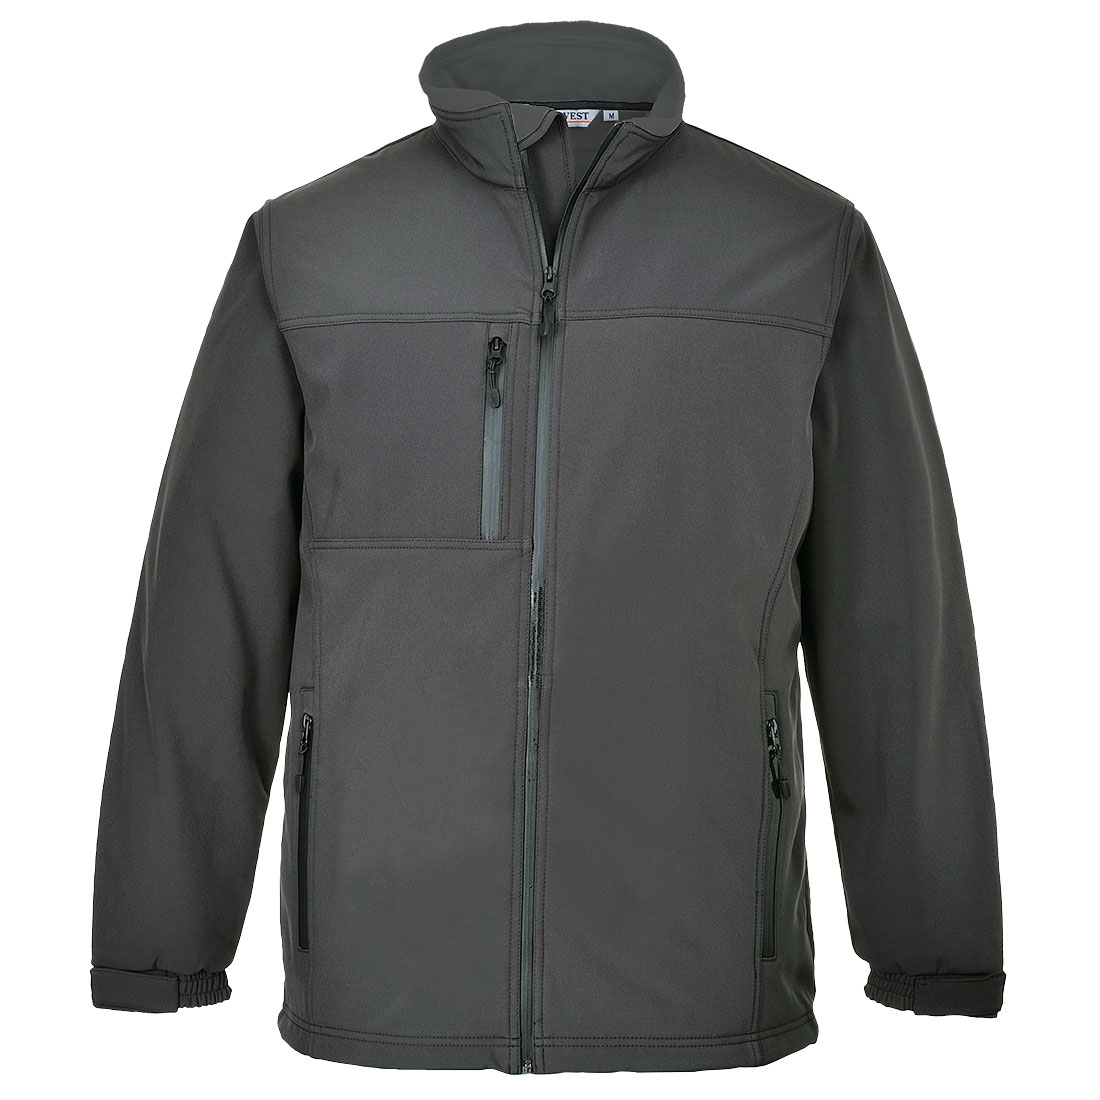 T750 WX3 Softshell Jacket (3L)